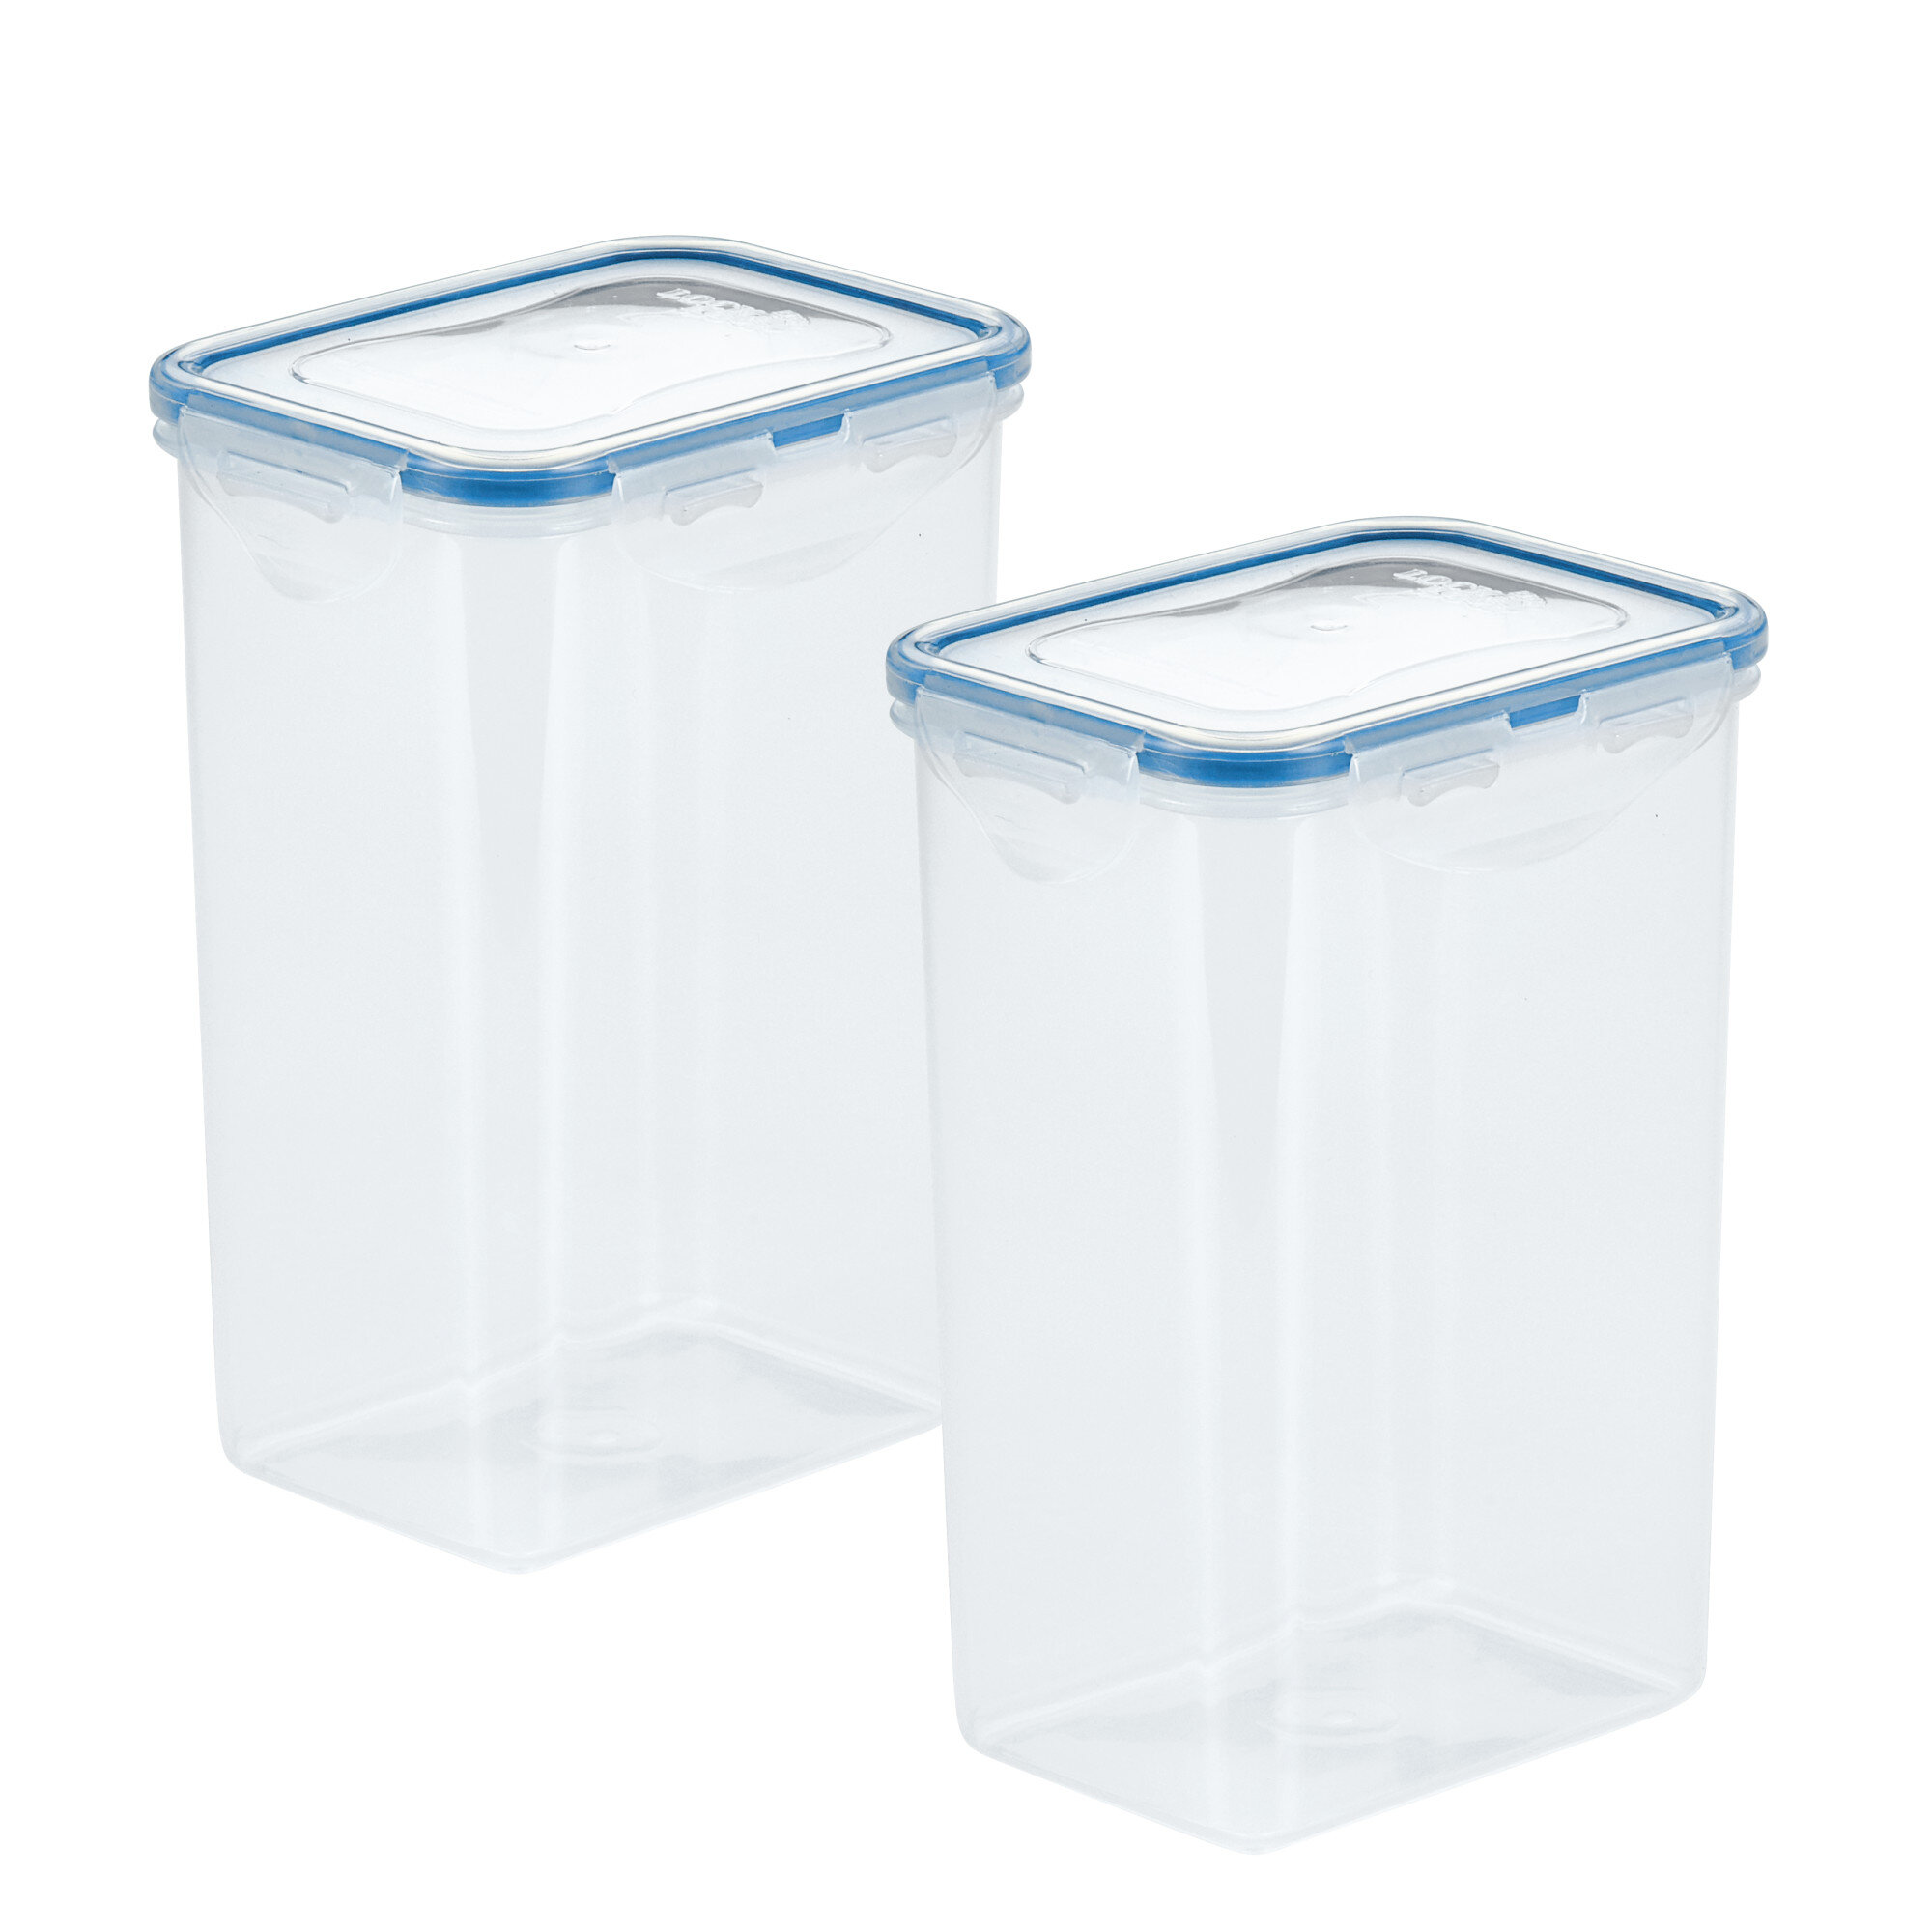 LocknLock Easy Essentials 2 Container Food Storage Set & Reviews